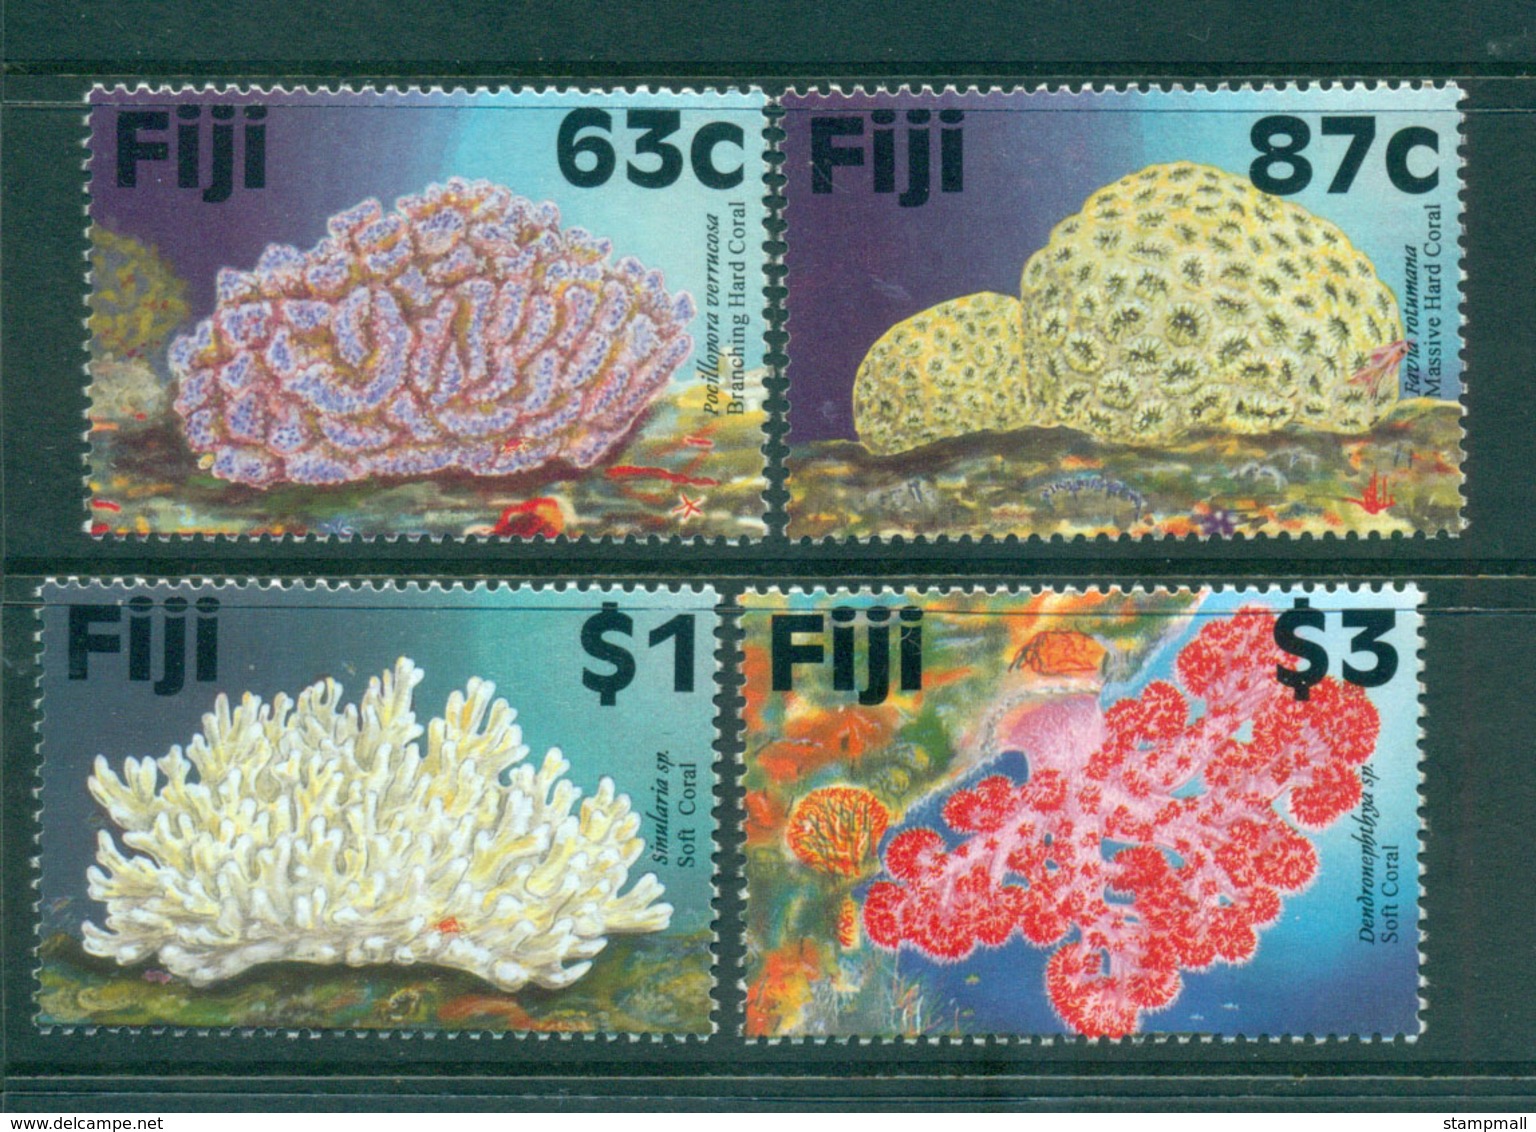 Fiji 1997 Coral MUH Lot54424 - Fiji (1970-...)